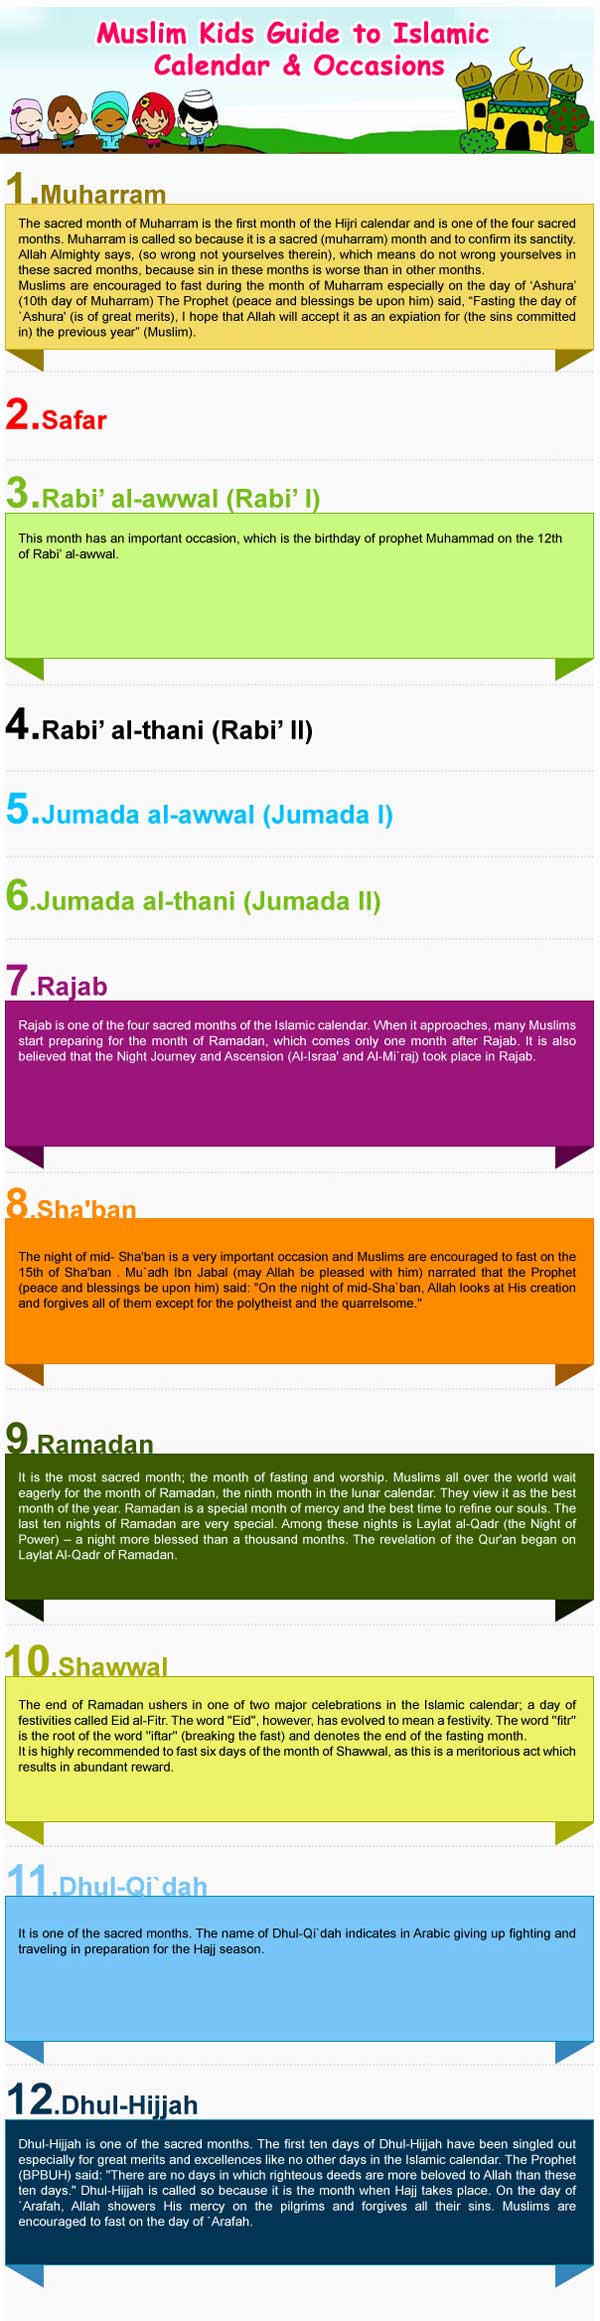 Islamic Calendar & Religious Occasions